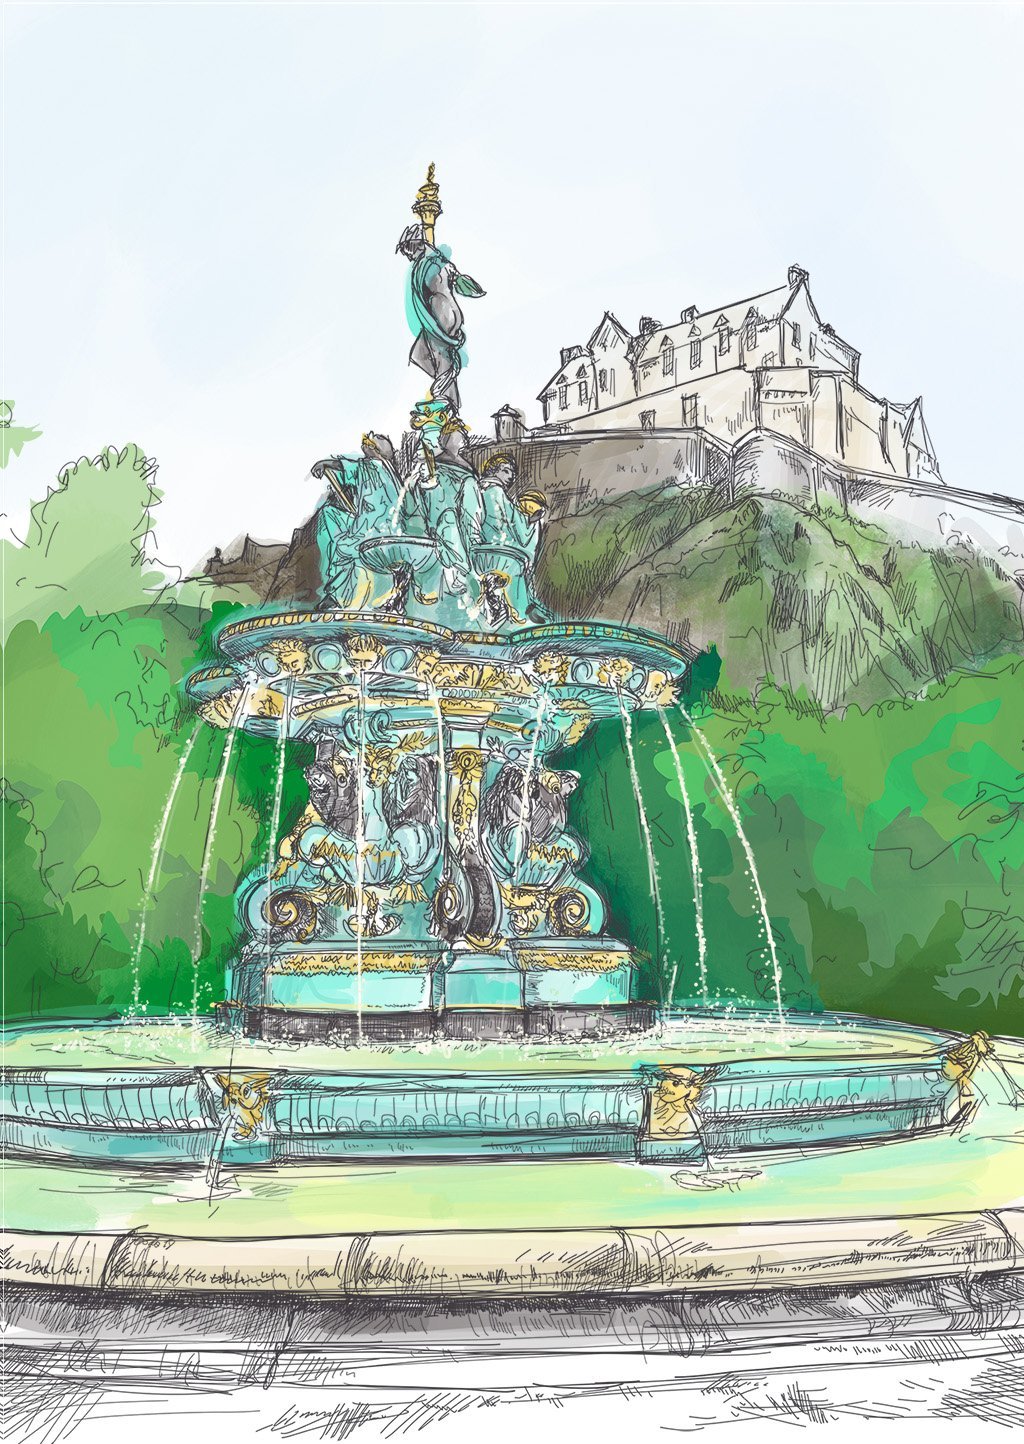 Ross Fountain Edinburgh Greeting Card